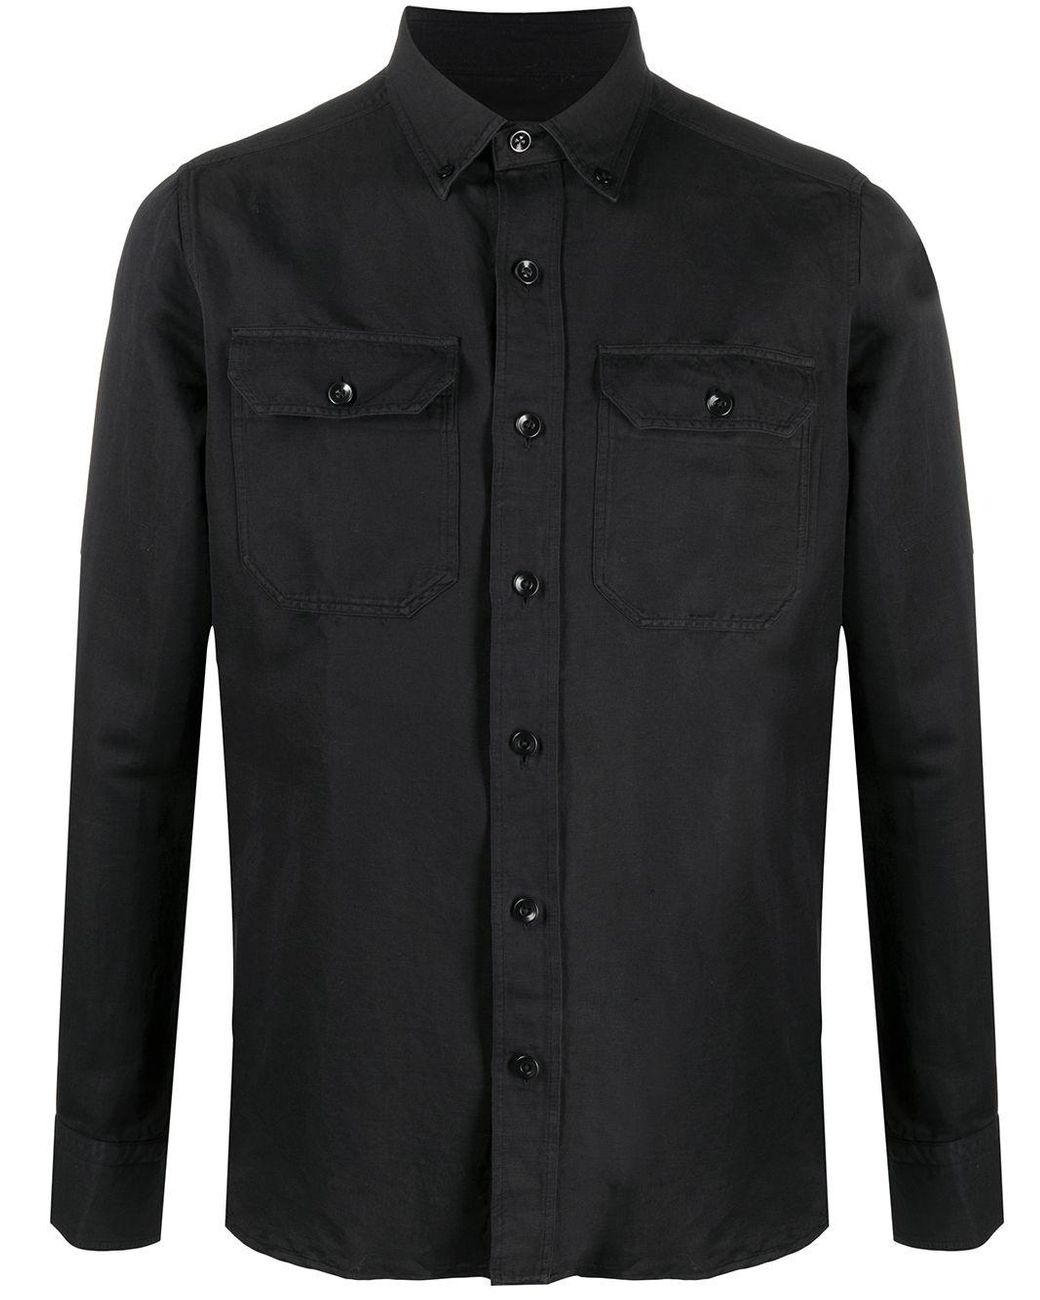 Tom Ford Linen Cheat Flap Pockets Shirt in Black for Men - Lyst